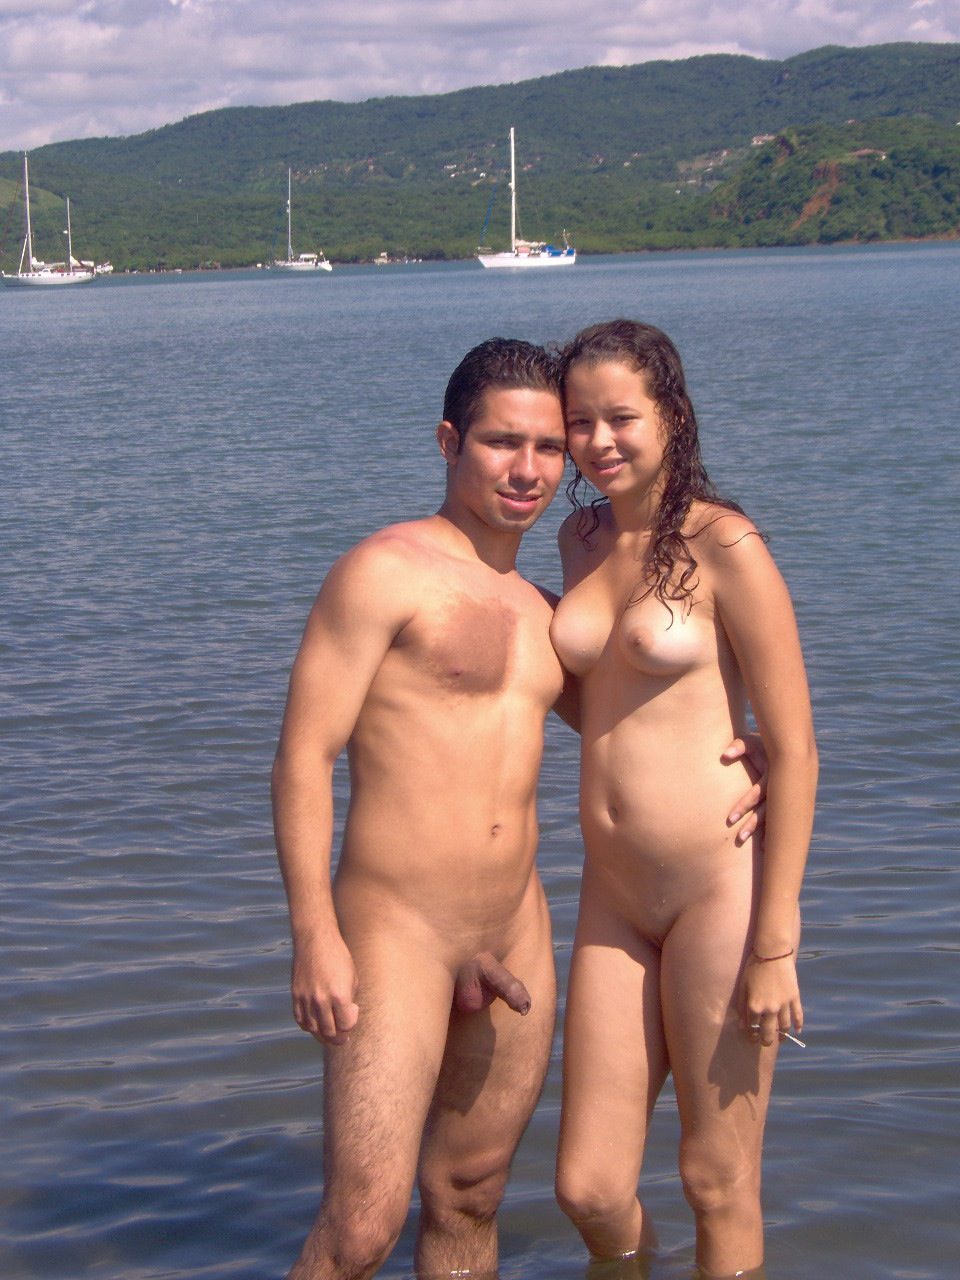 https://www.nudismlife.com/galleries/nudists_and_nude/nudists_couple/nudists_nude_naturists_couple_2356.jpg